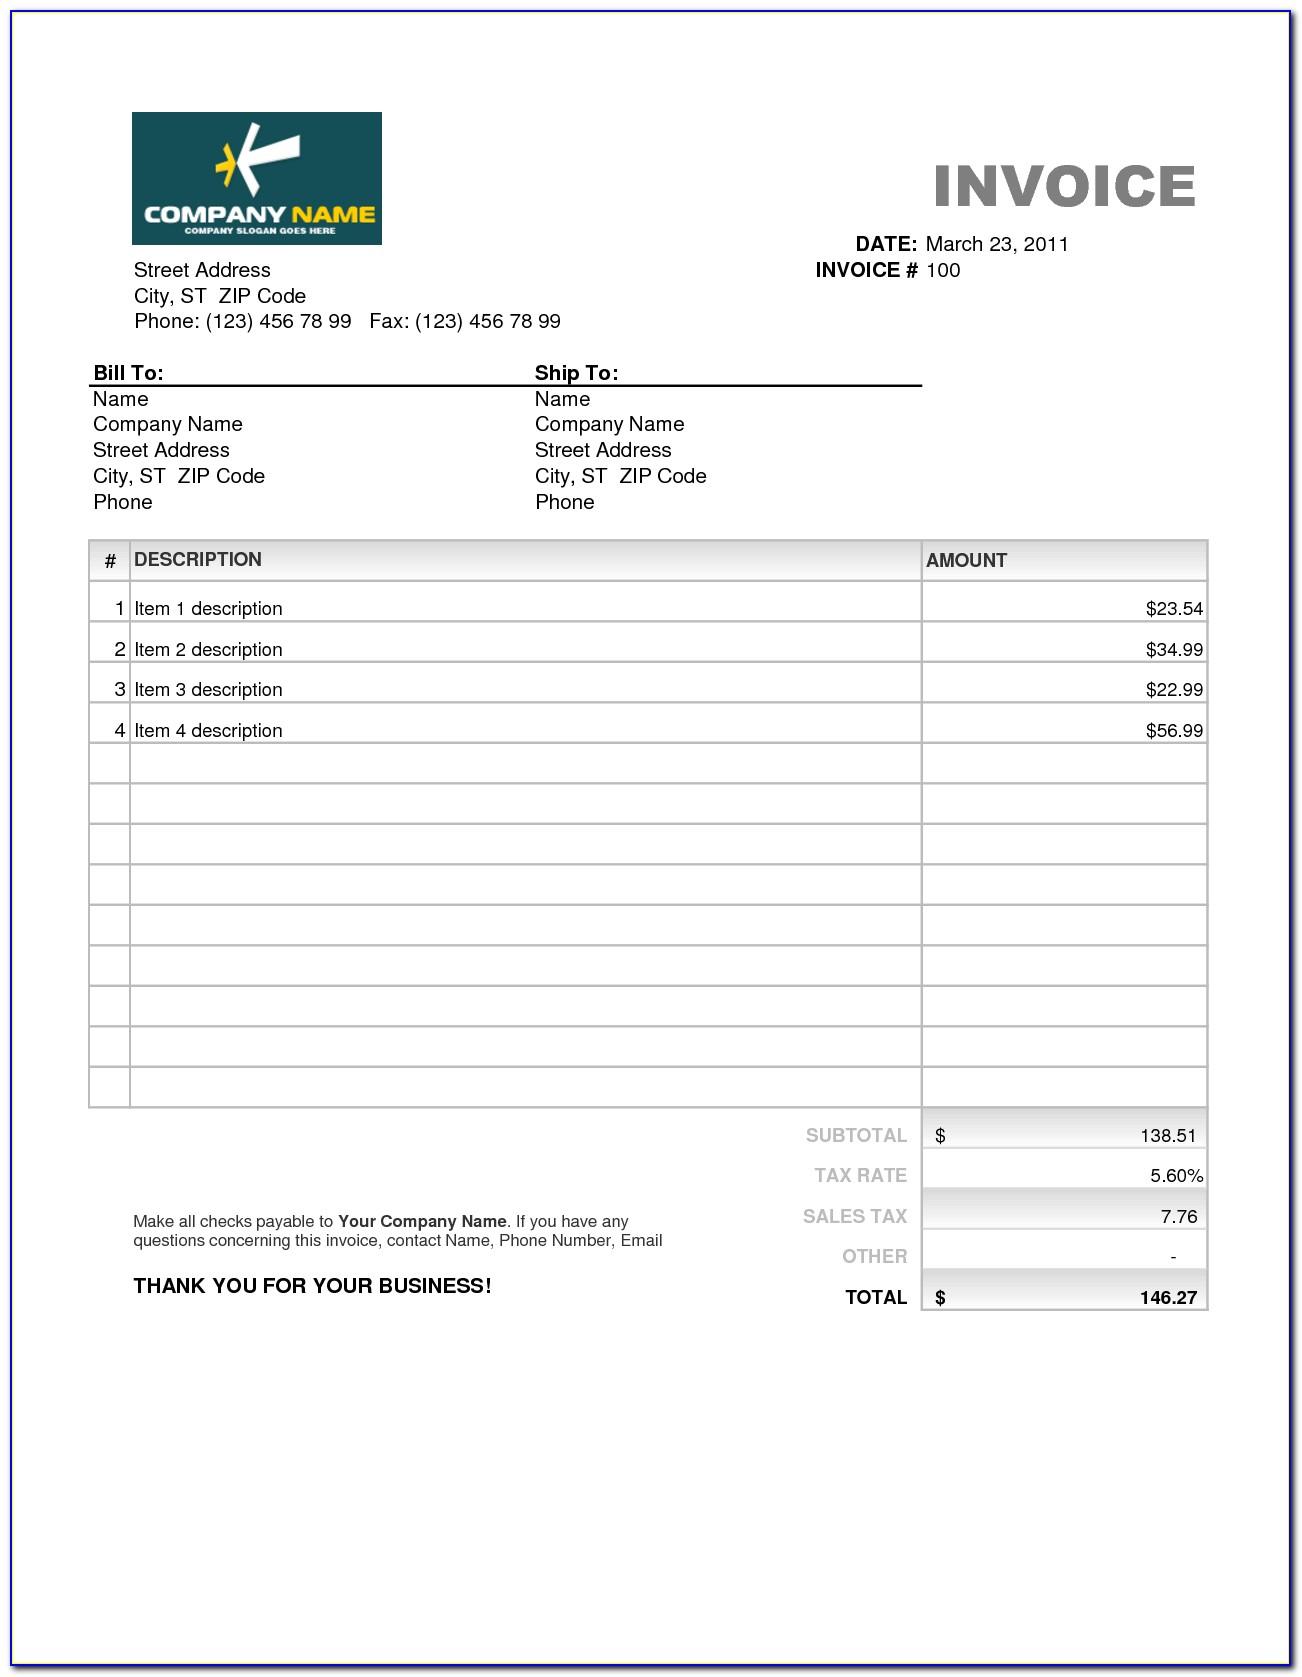 Reimbursement Invoice Format Under Gst